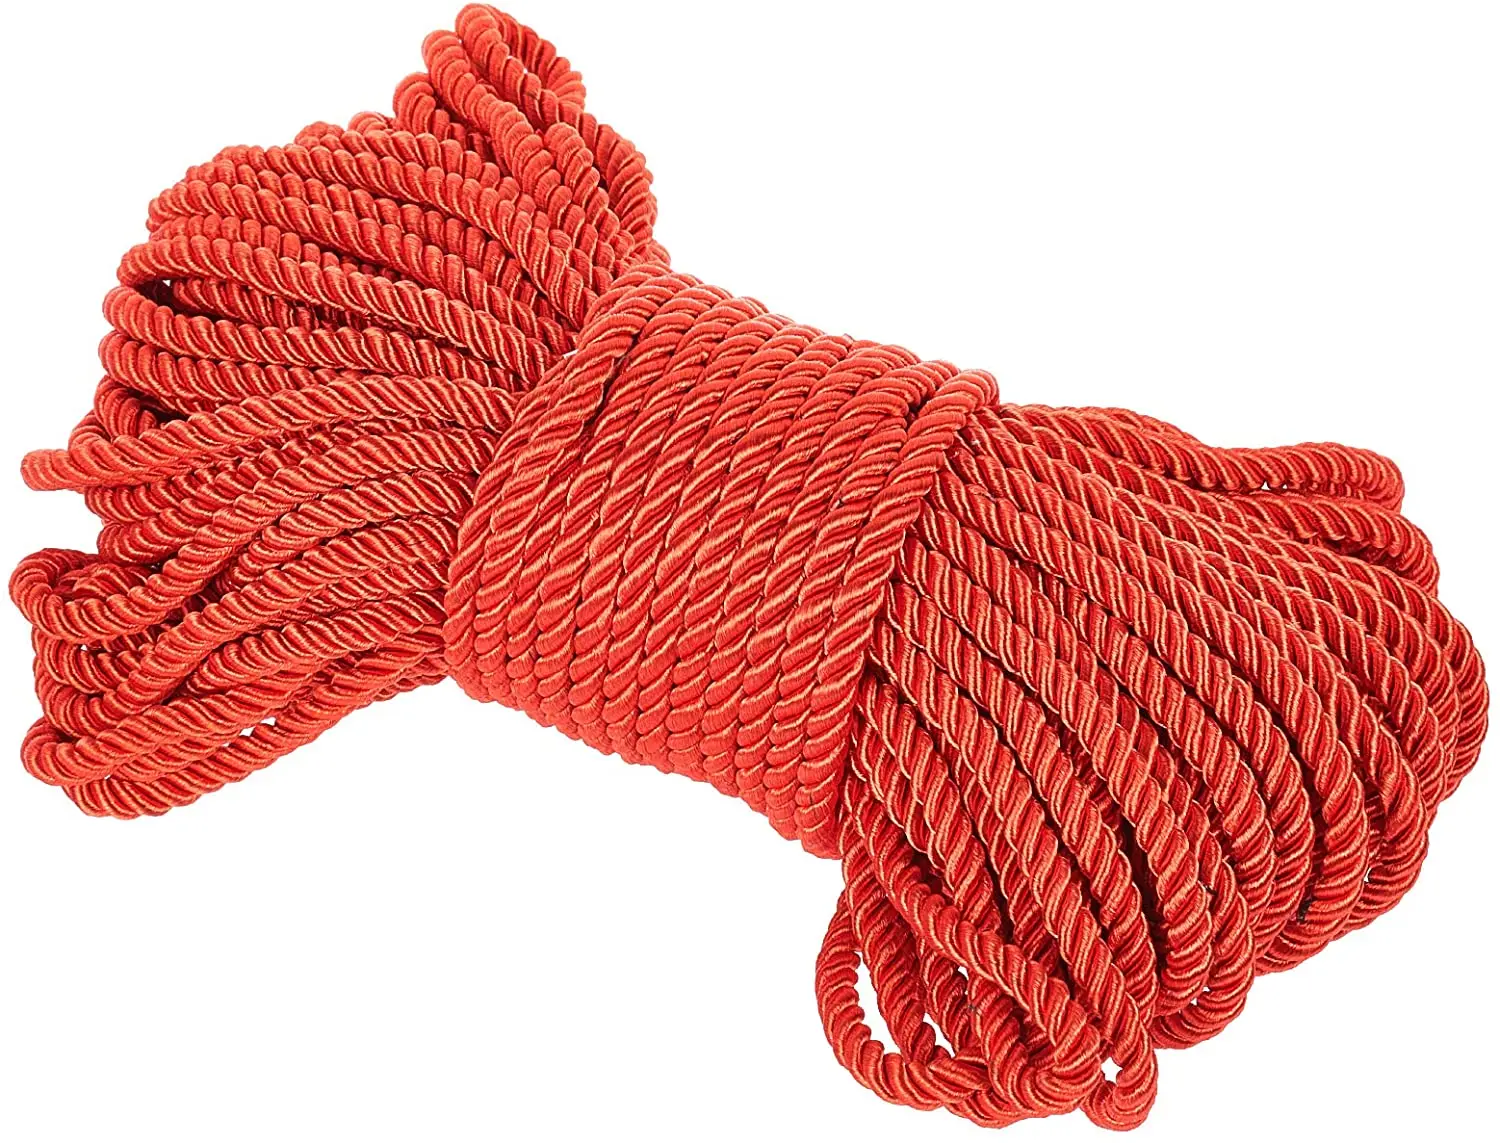 

Красный витой декоративный шнур 6 мм, 27 ярдов, декоративный шнур для занавесок, обивки, Honor, шнур для домашнего декора, обивка